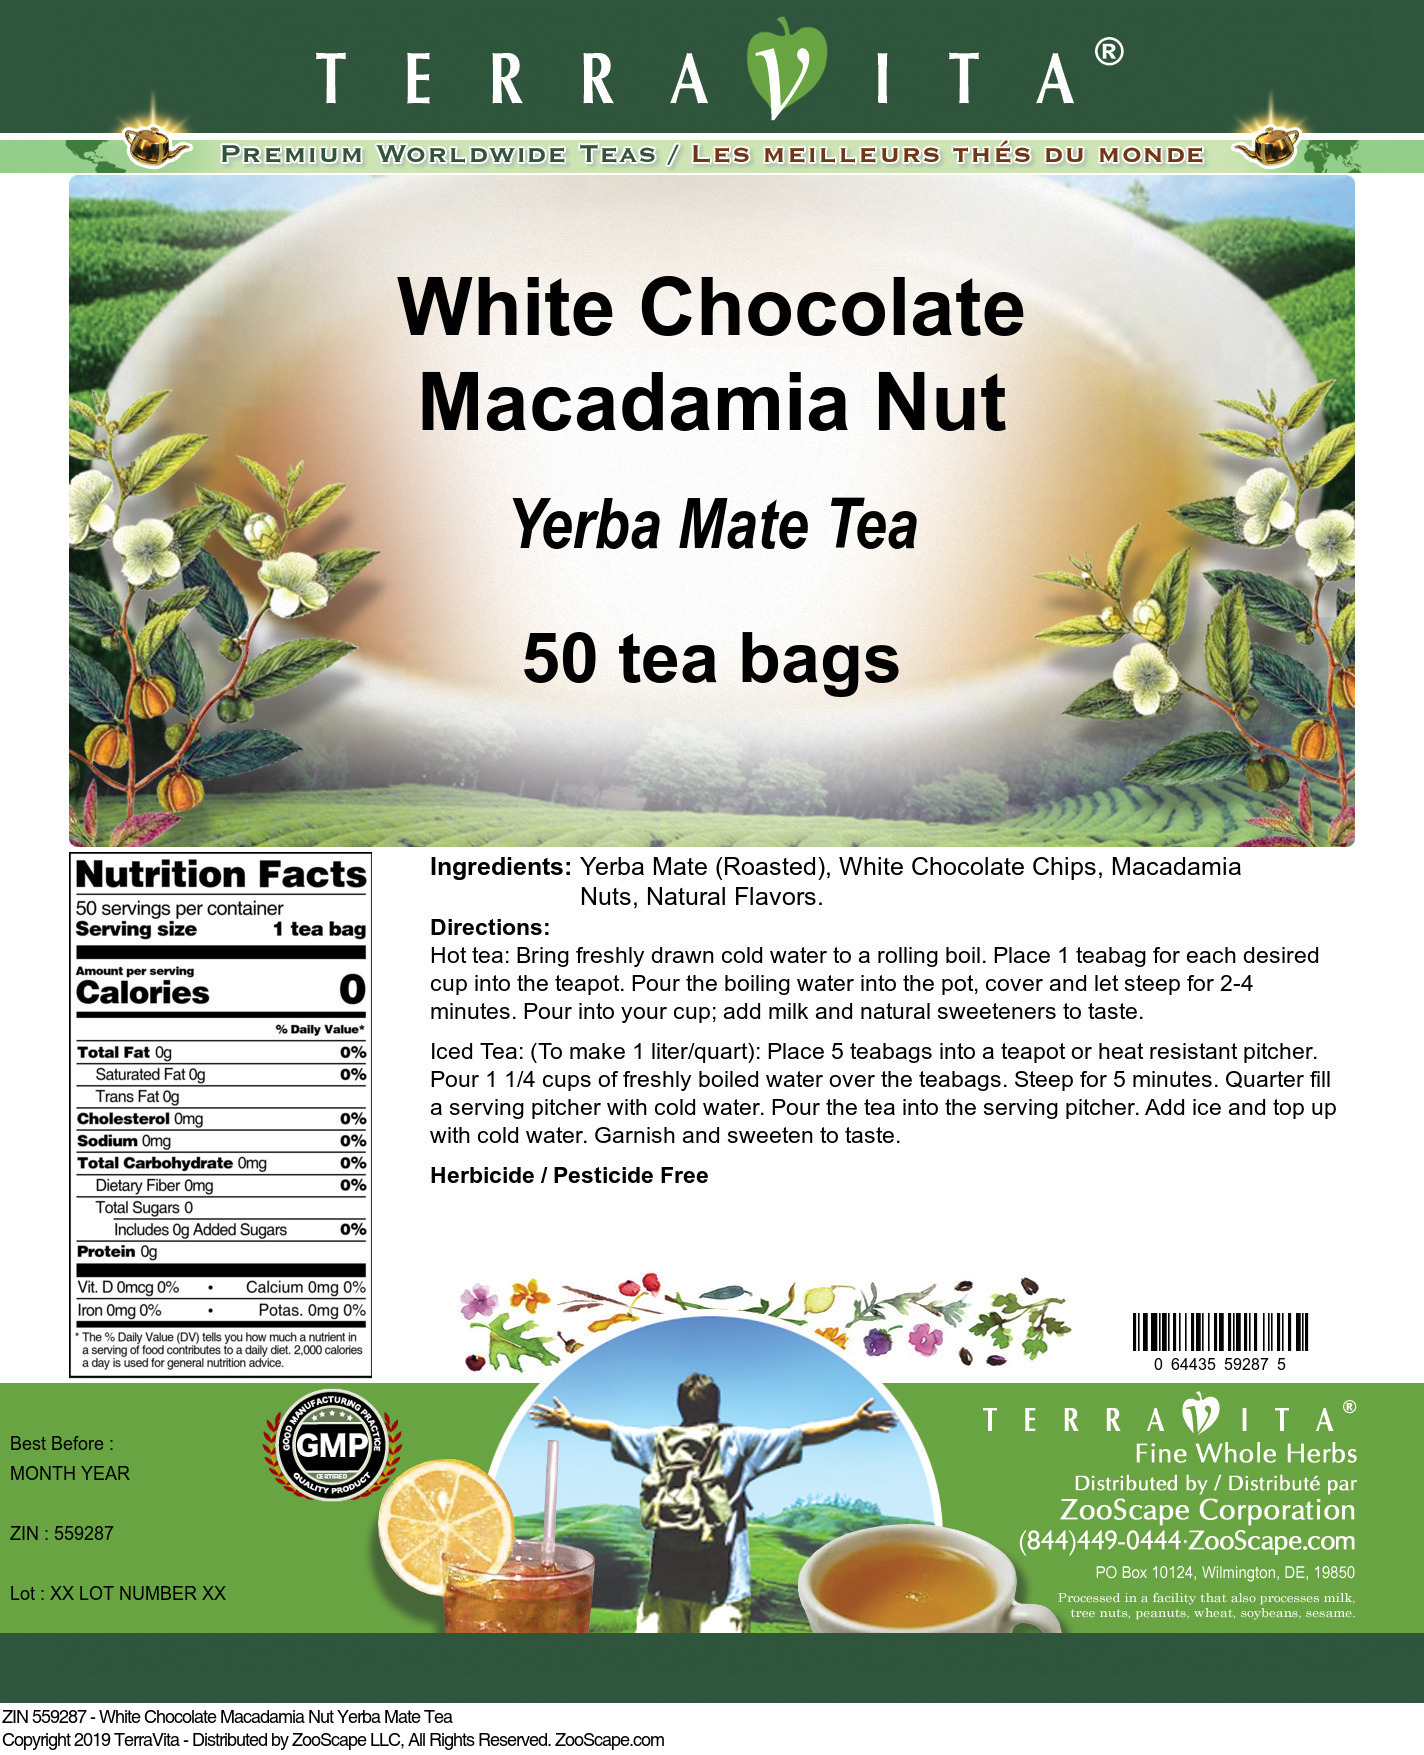 White Chocolate Macadamia Nut Yerba Mate Tea - Label